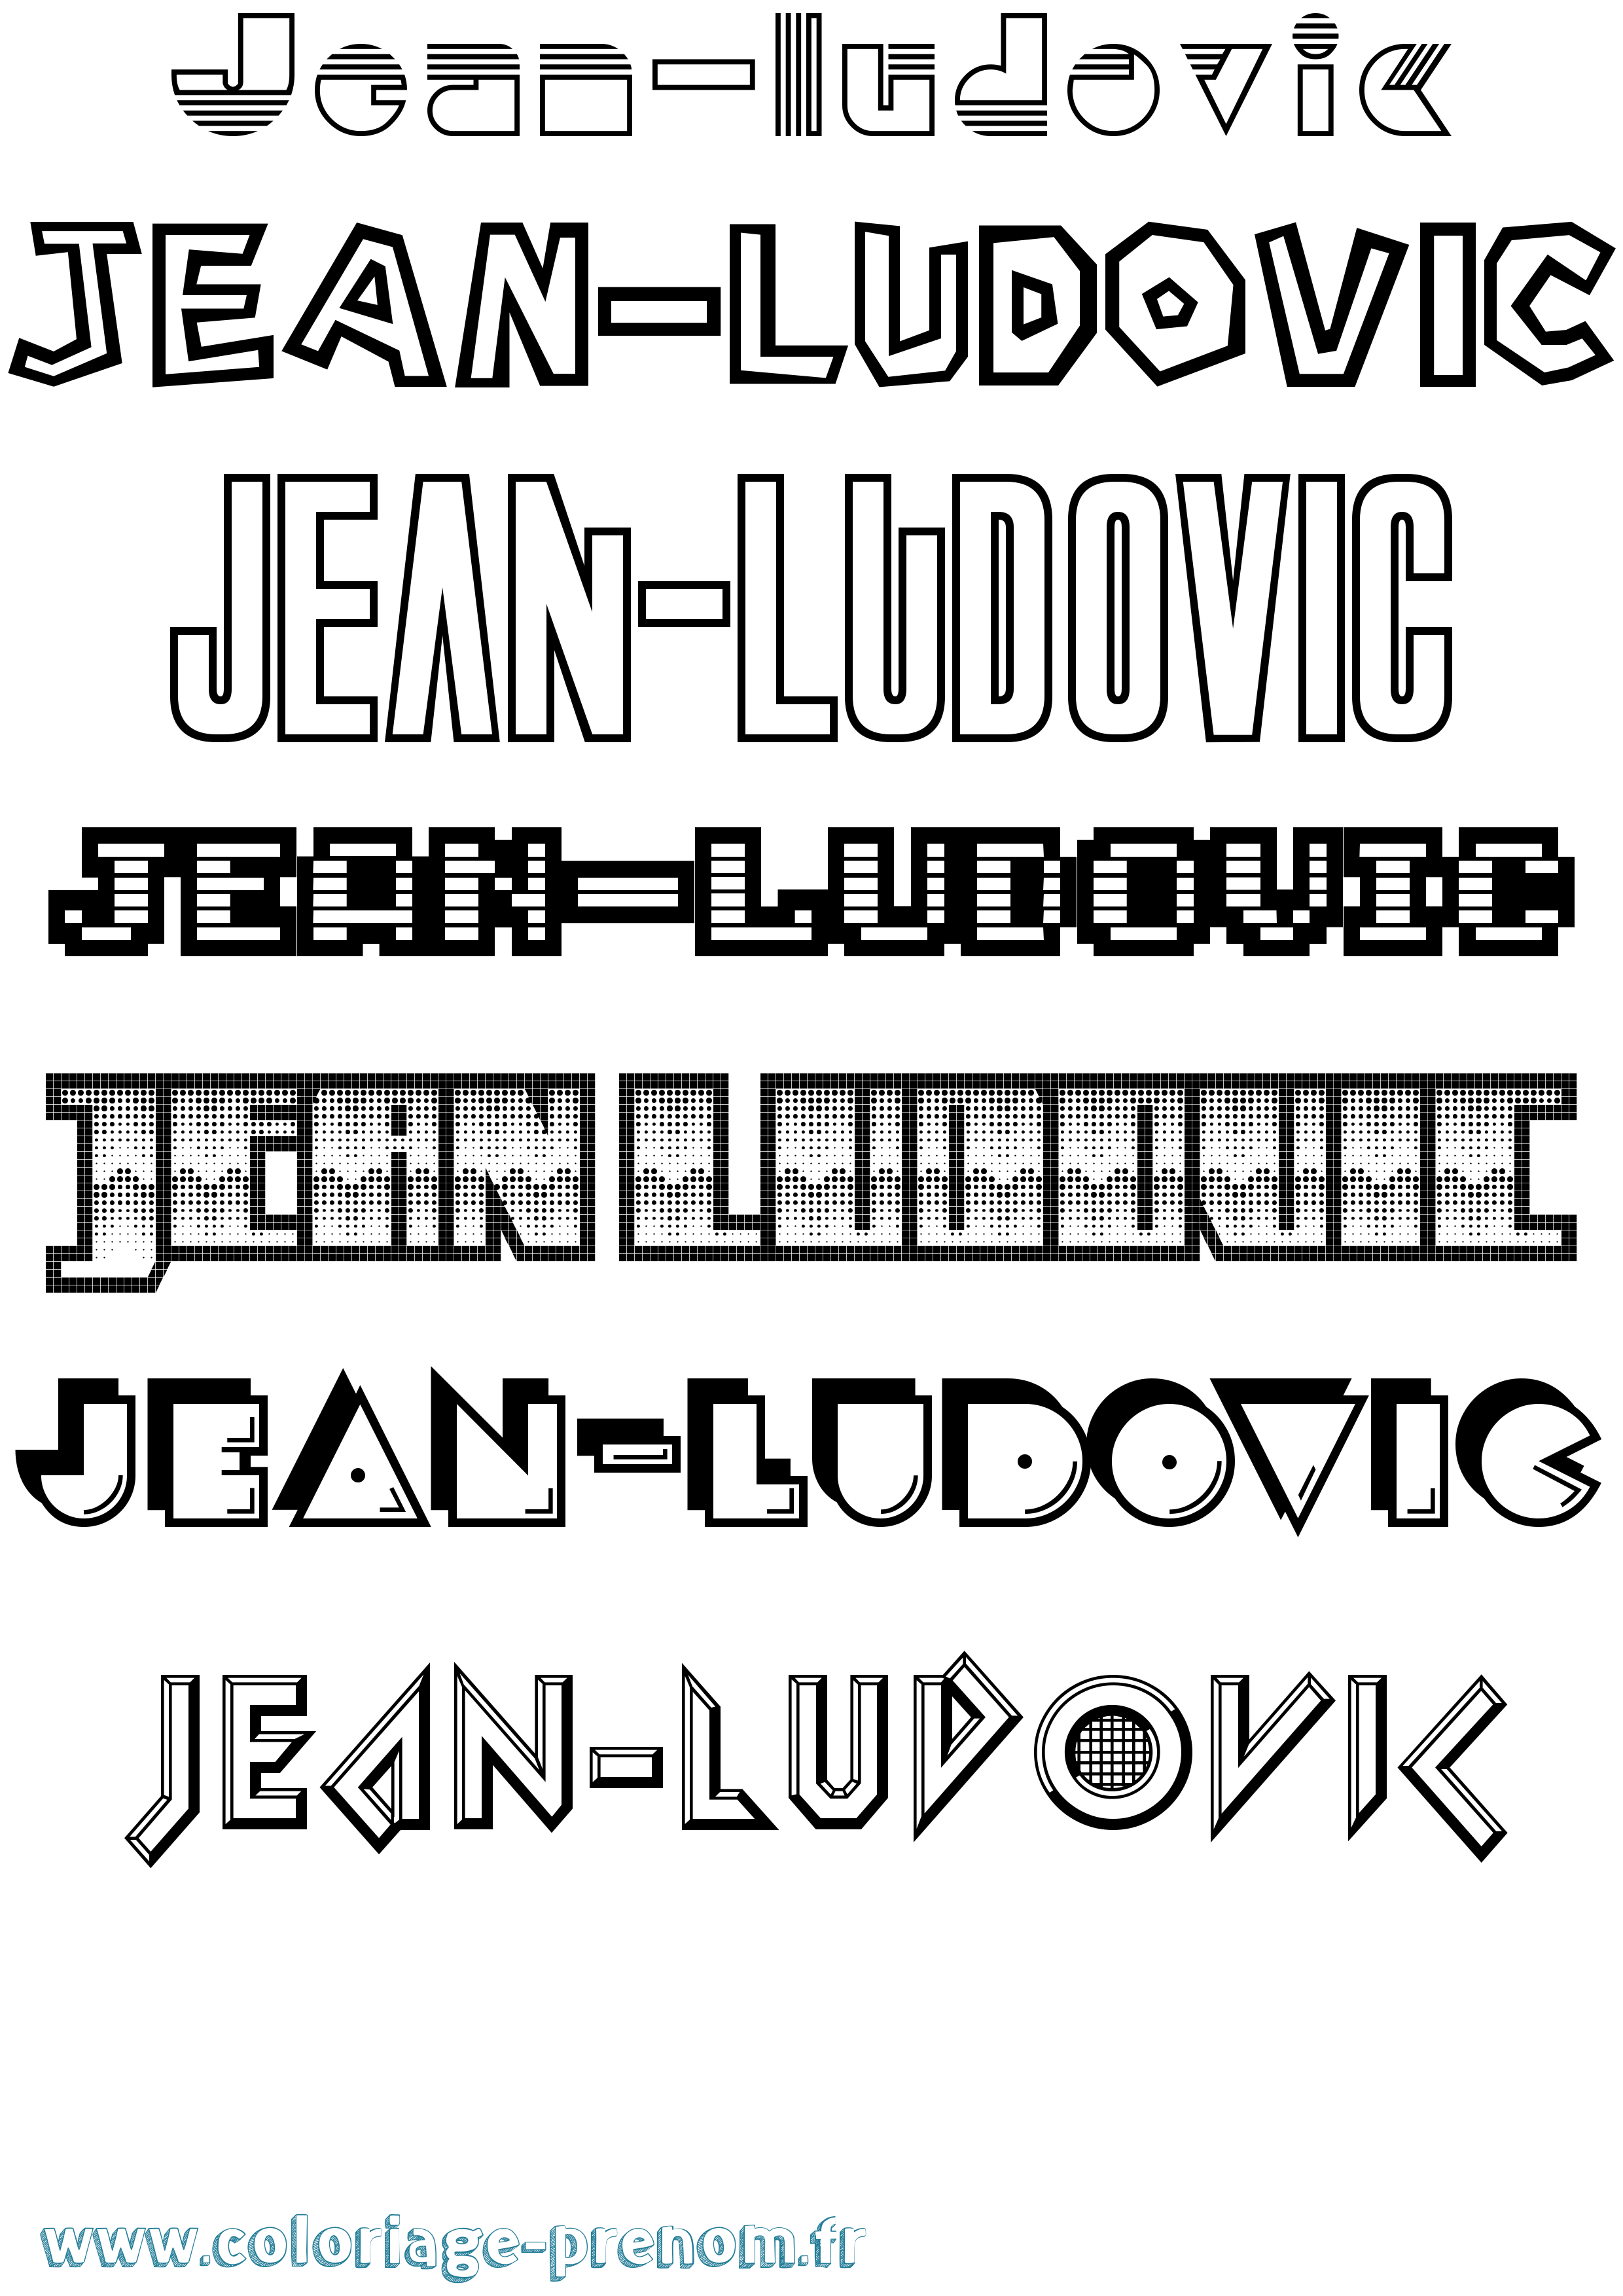 Coloriage prénom Jean-Ludovic Jeux Vidéos